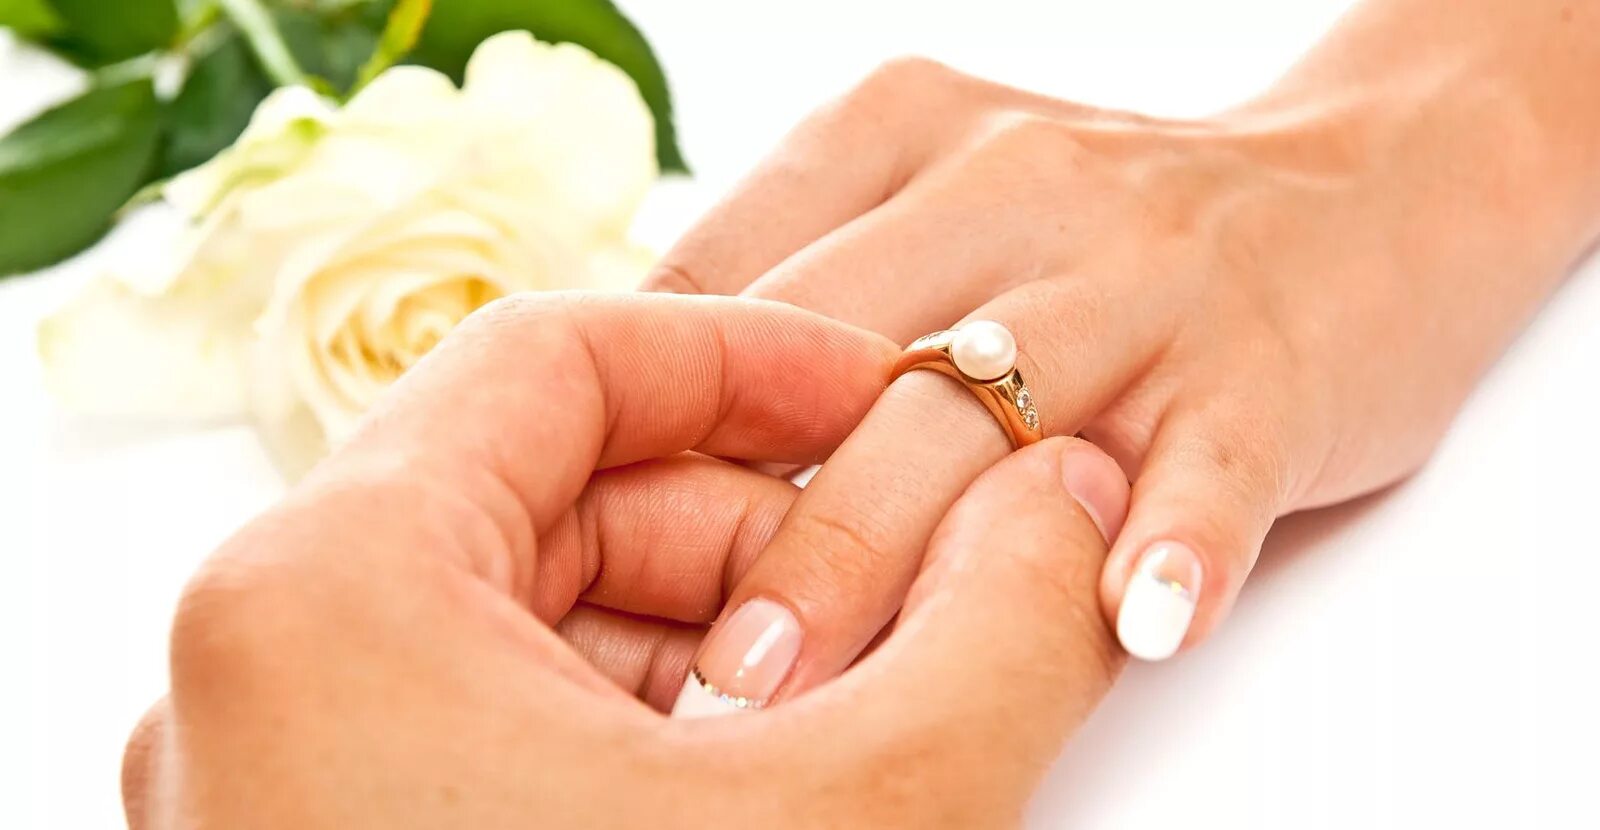 Сонник кольцо мужа. Мужчина дарит кольцо. Парень дарит девушке кольцо. Кольцо для предложения. Обручальное кольцо для девушки.